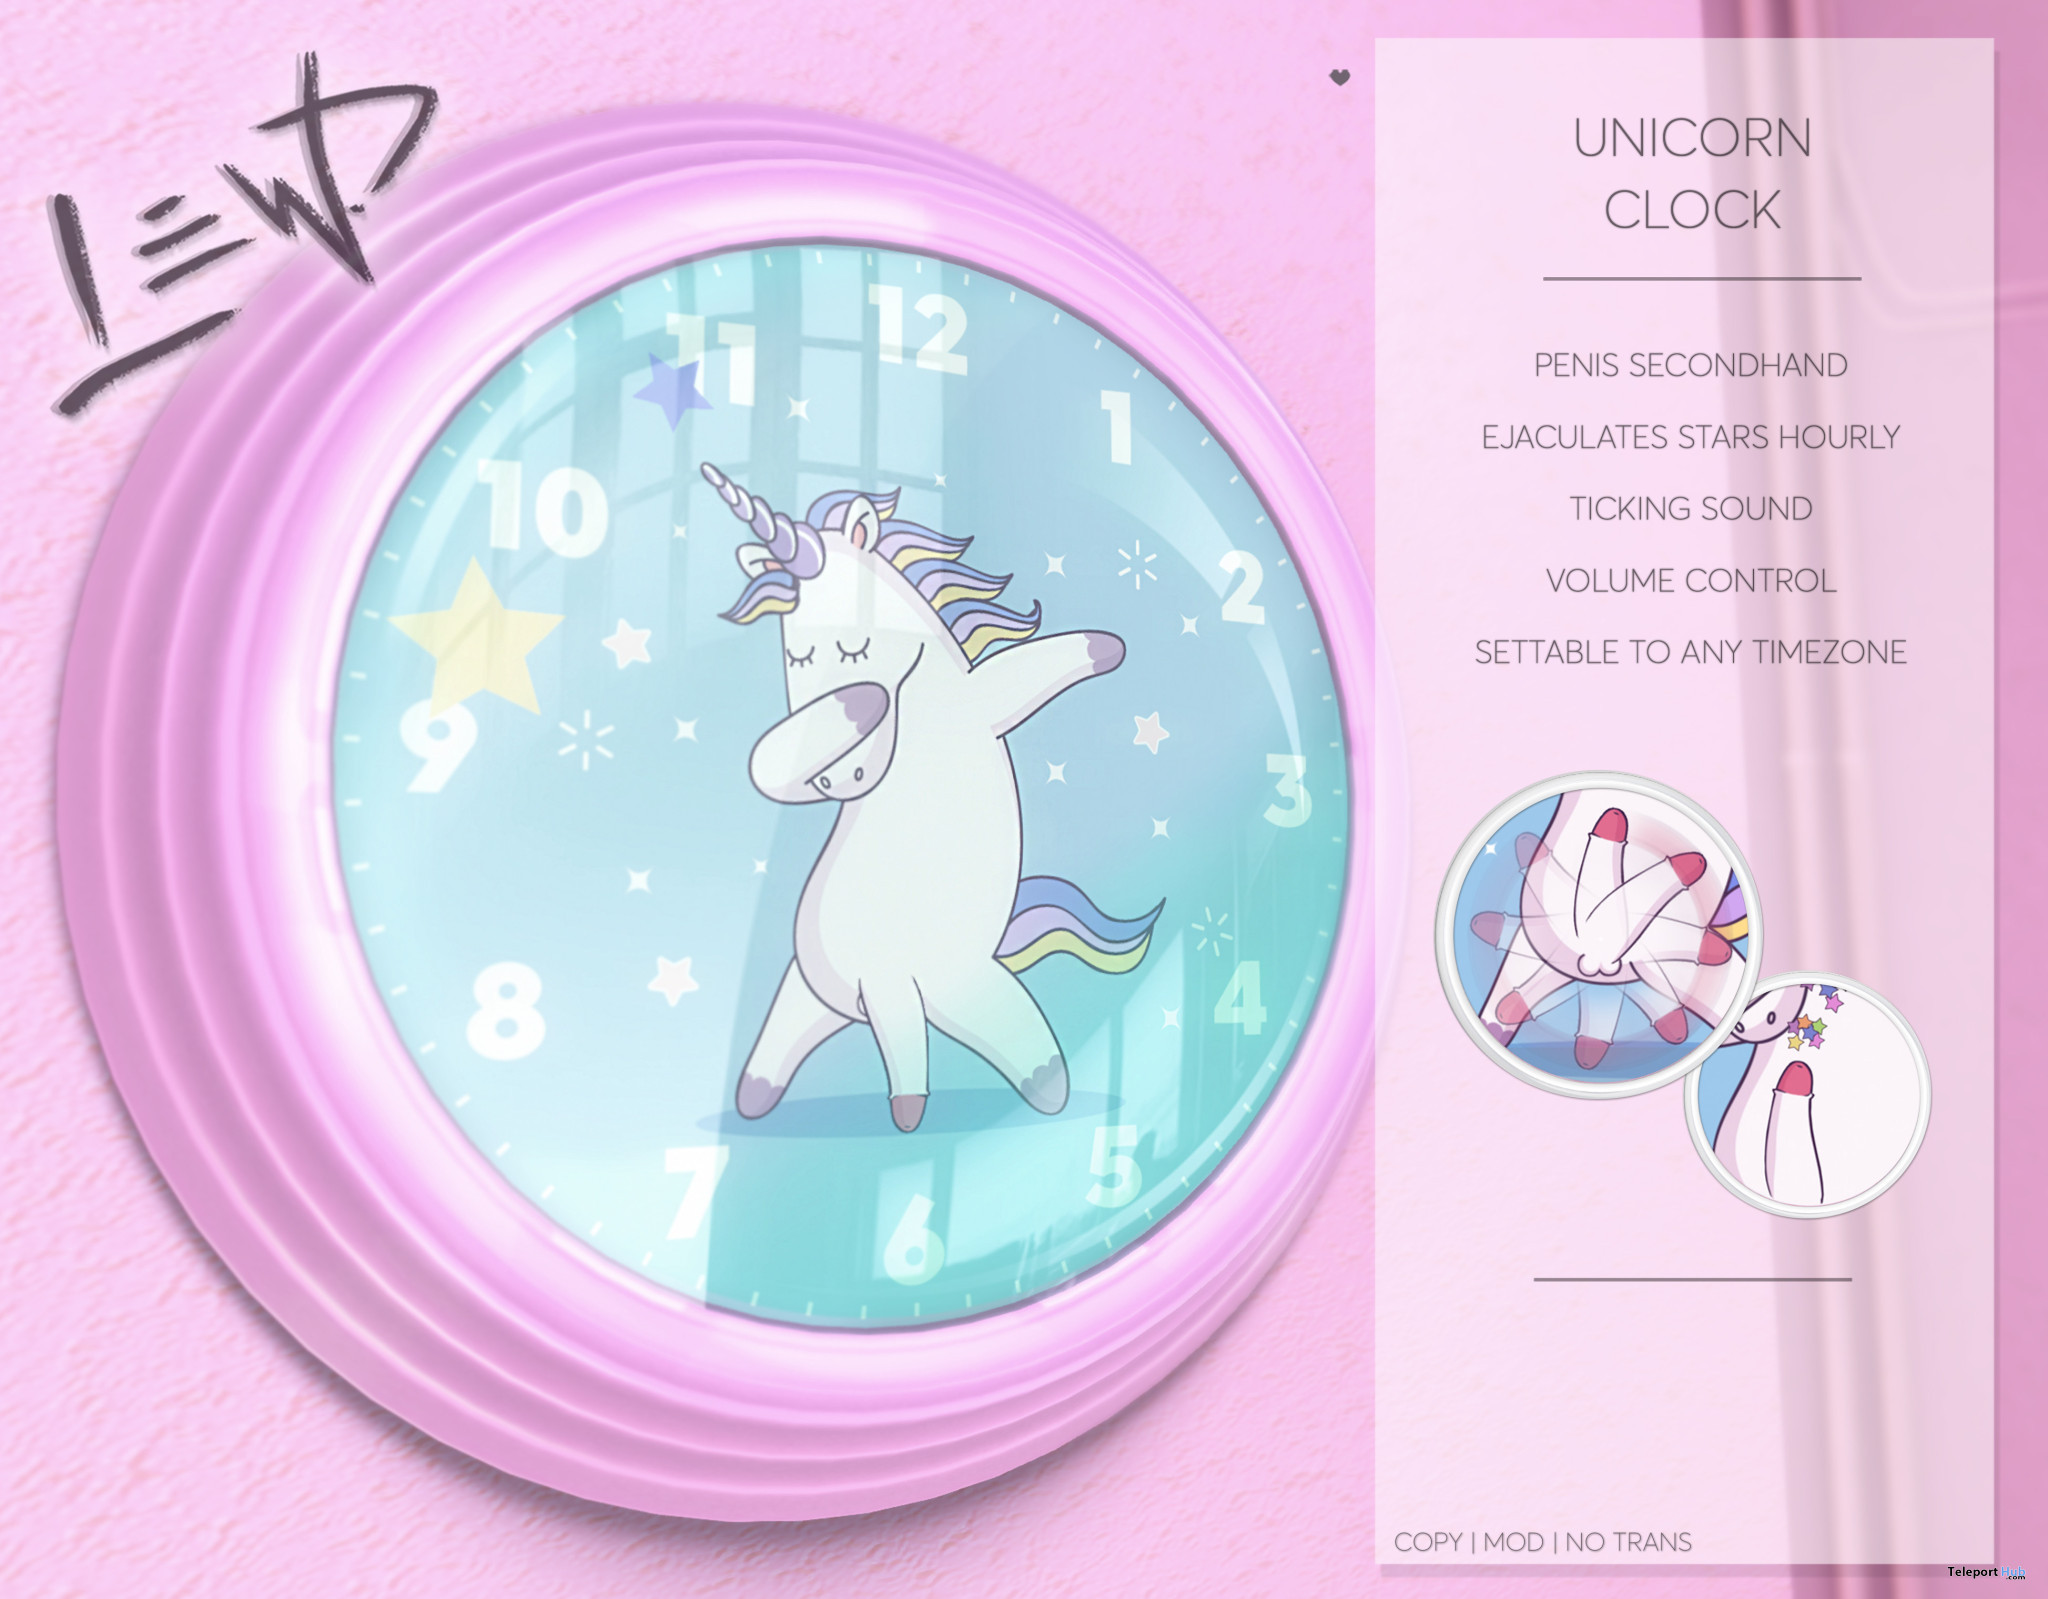 Unicorn Clock August 2022 Group Gift by LEWD - Teleport Hub - teleporthub.com